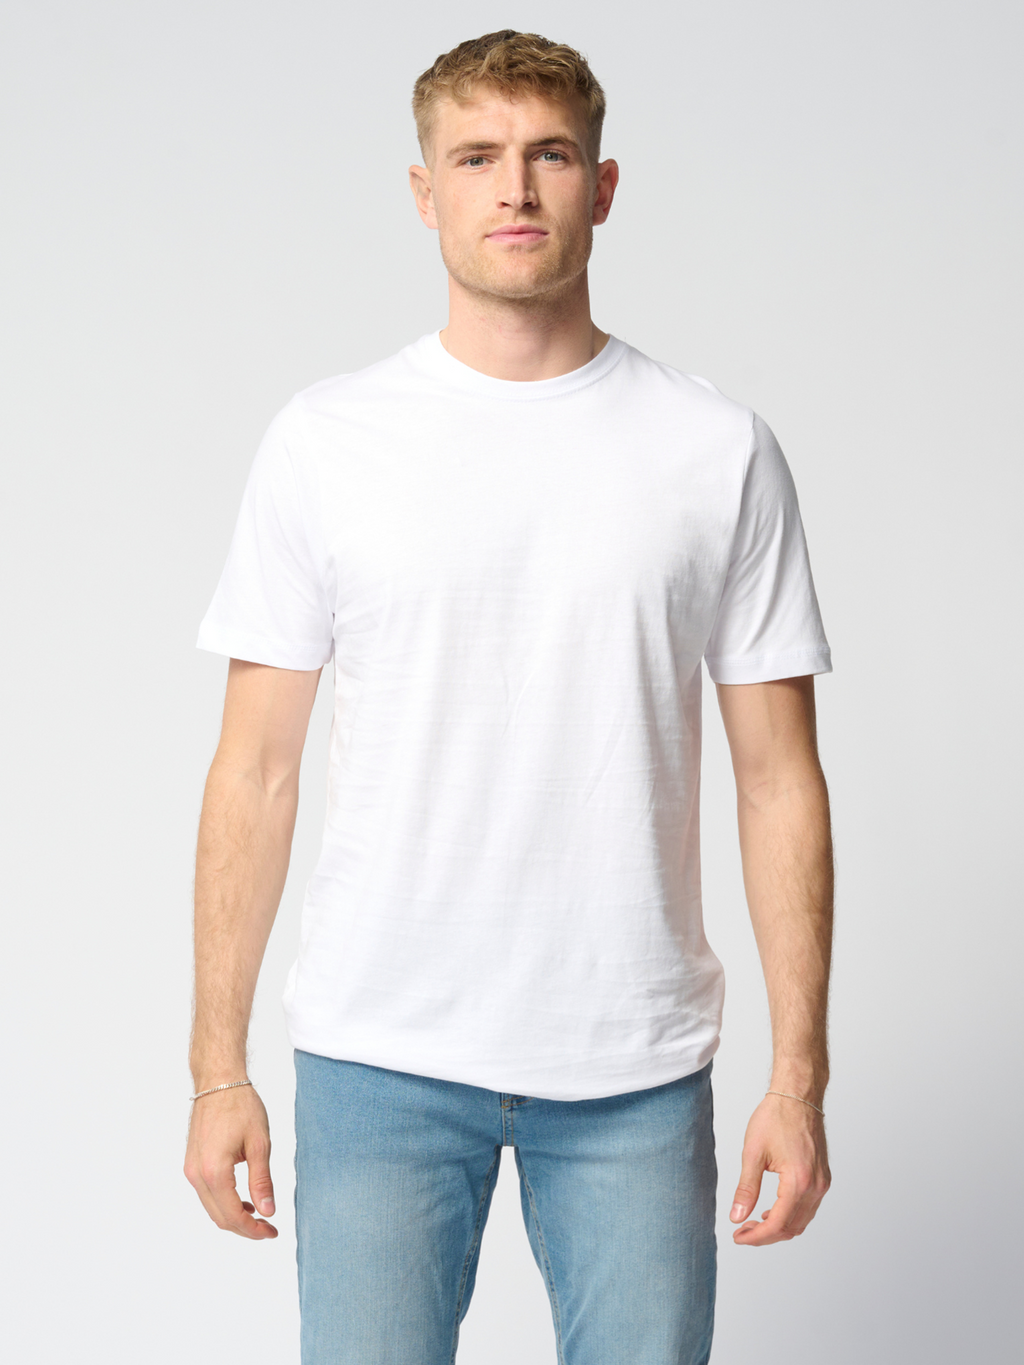 Organic Basic T-shirts - Package Deal (4 pcs.)